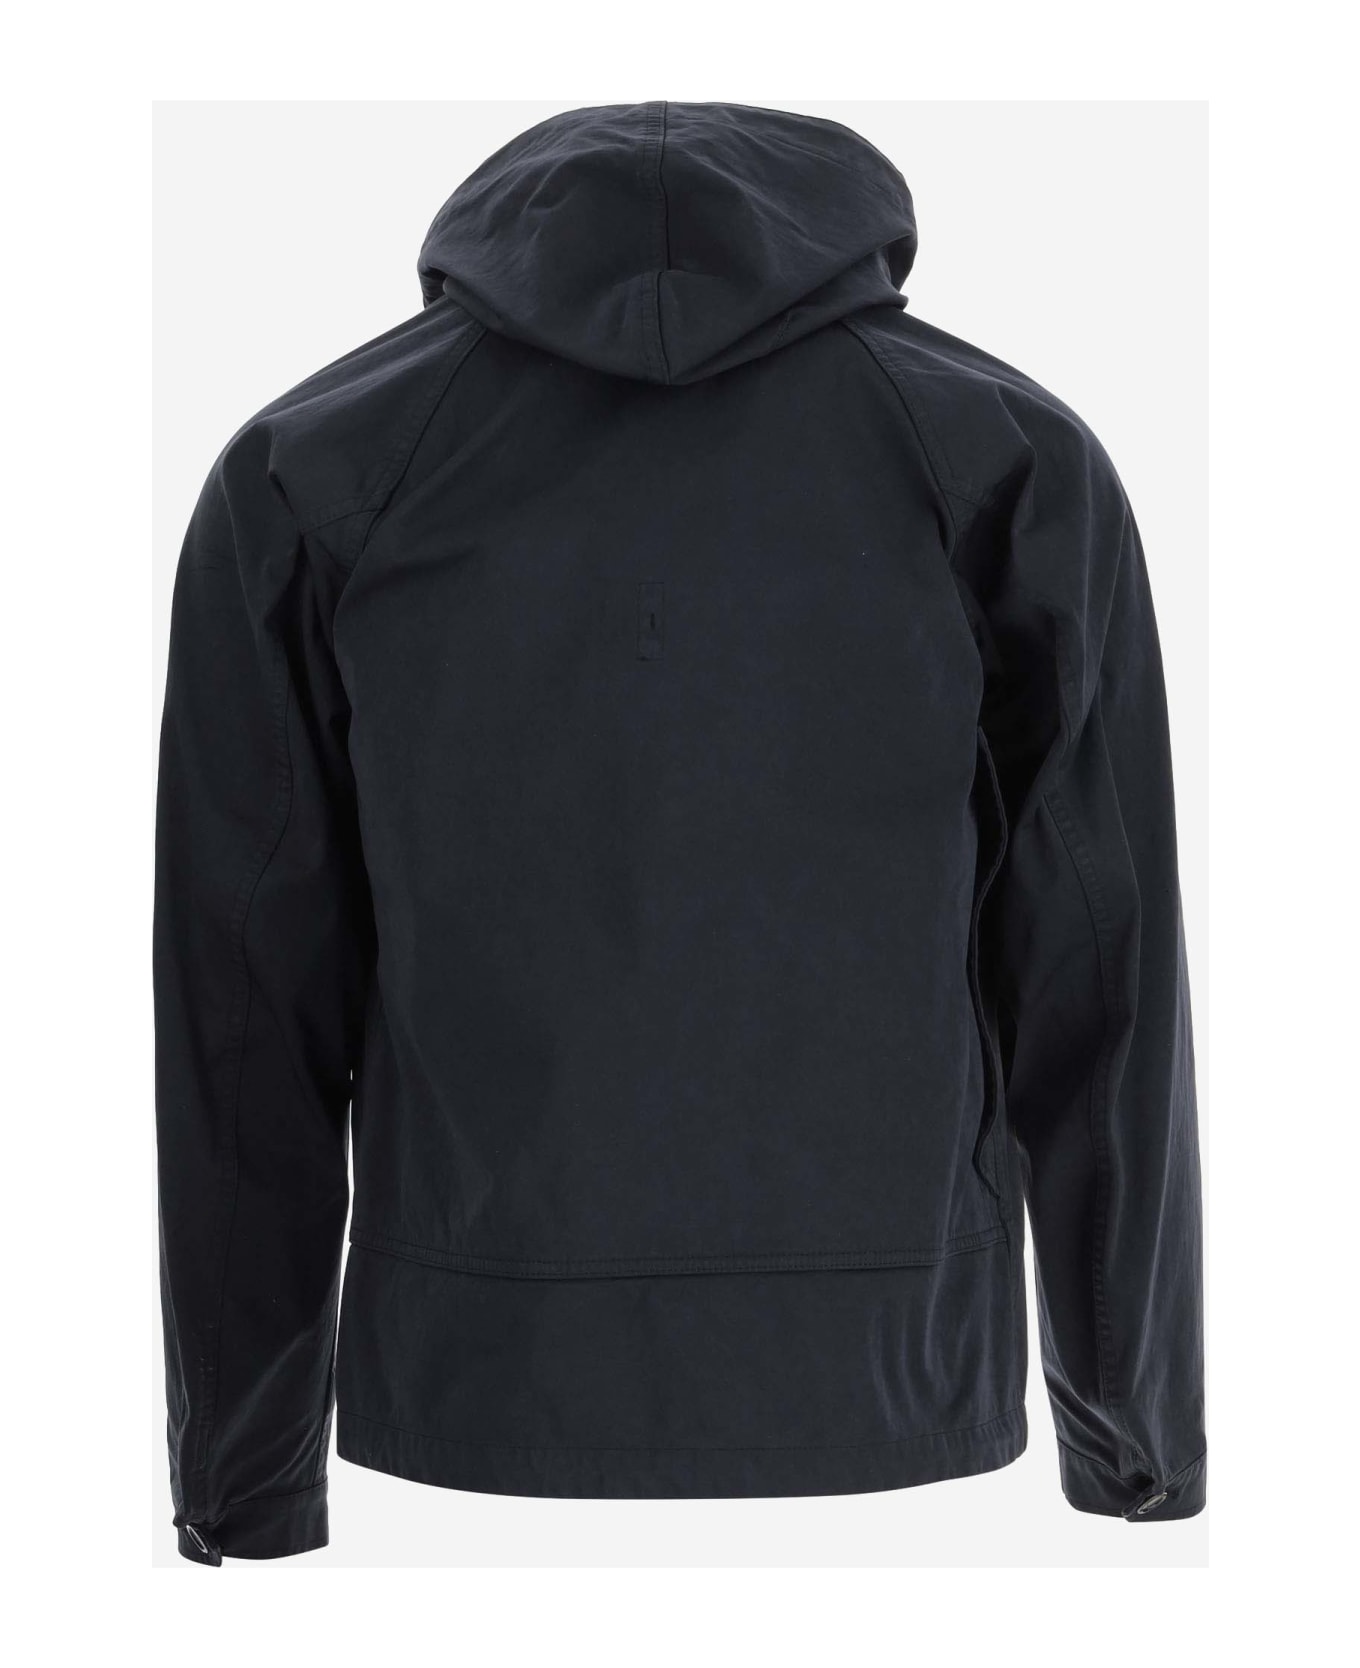 Ten C Nylon Jacket With Hood - Black